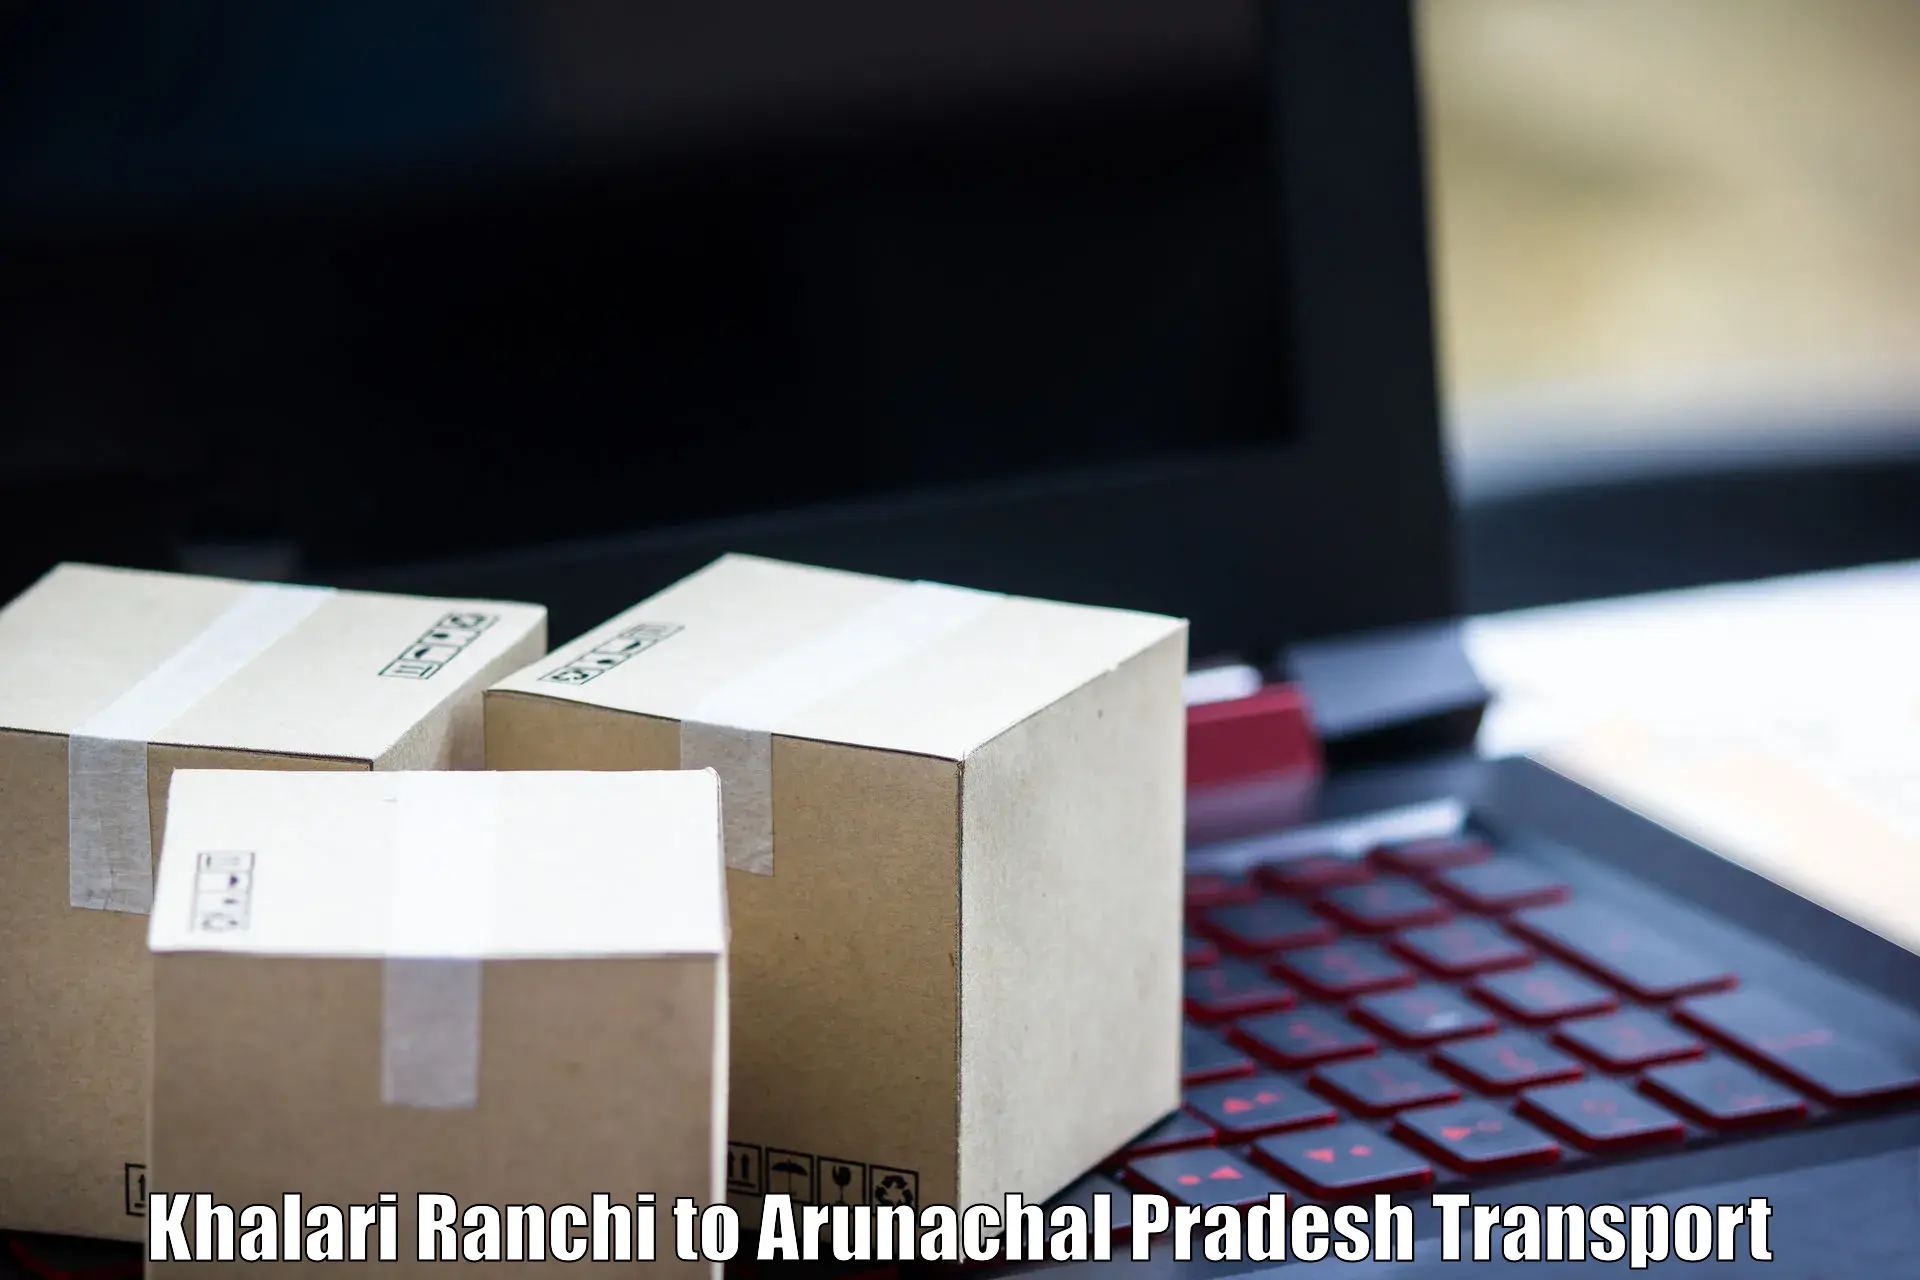 Truck transport companies in India Khalari Ranchi to Roing